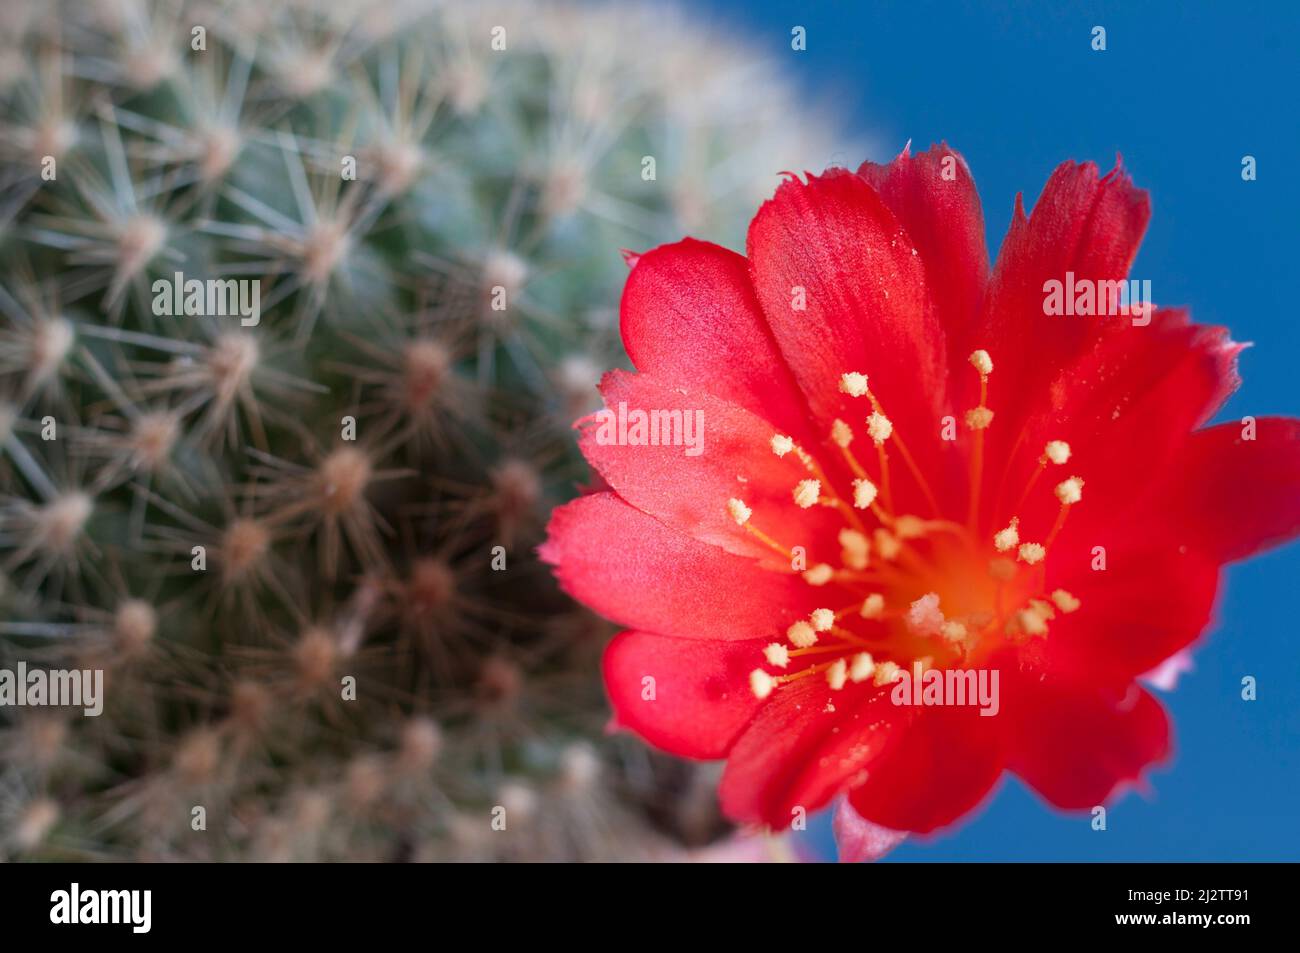 Rebutia minuscula cactus flower close up shot local focus Stock Photo